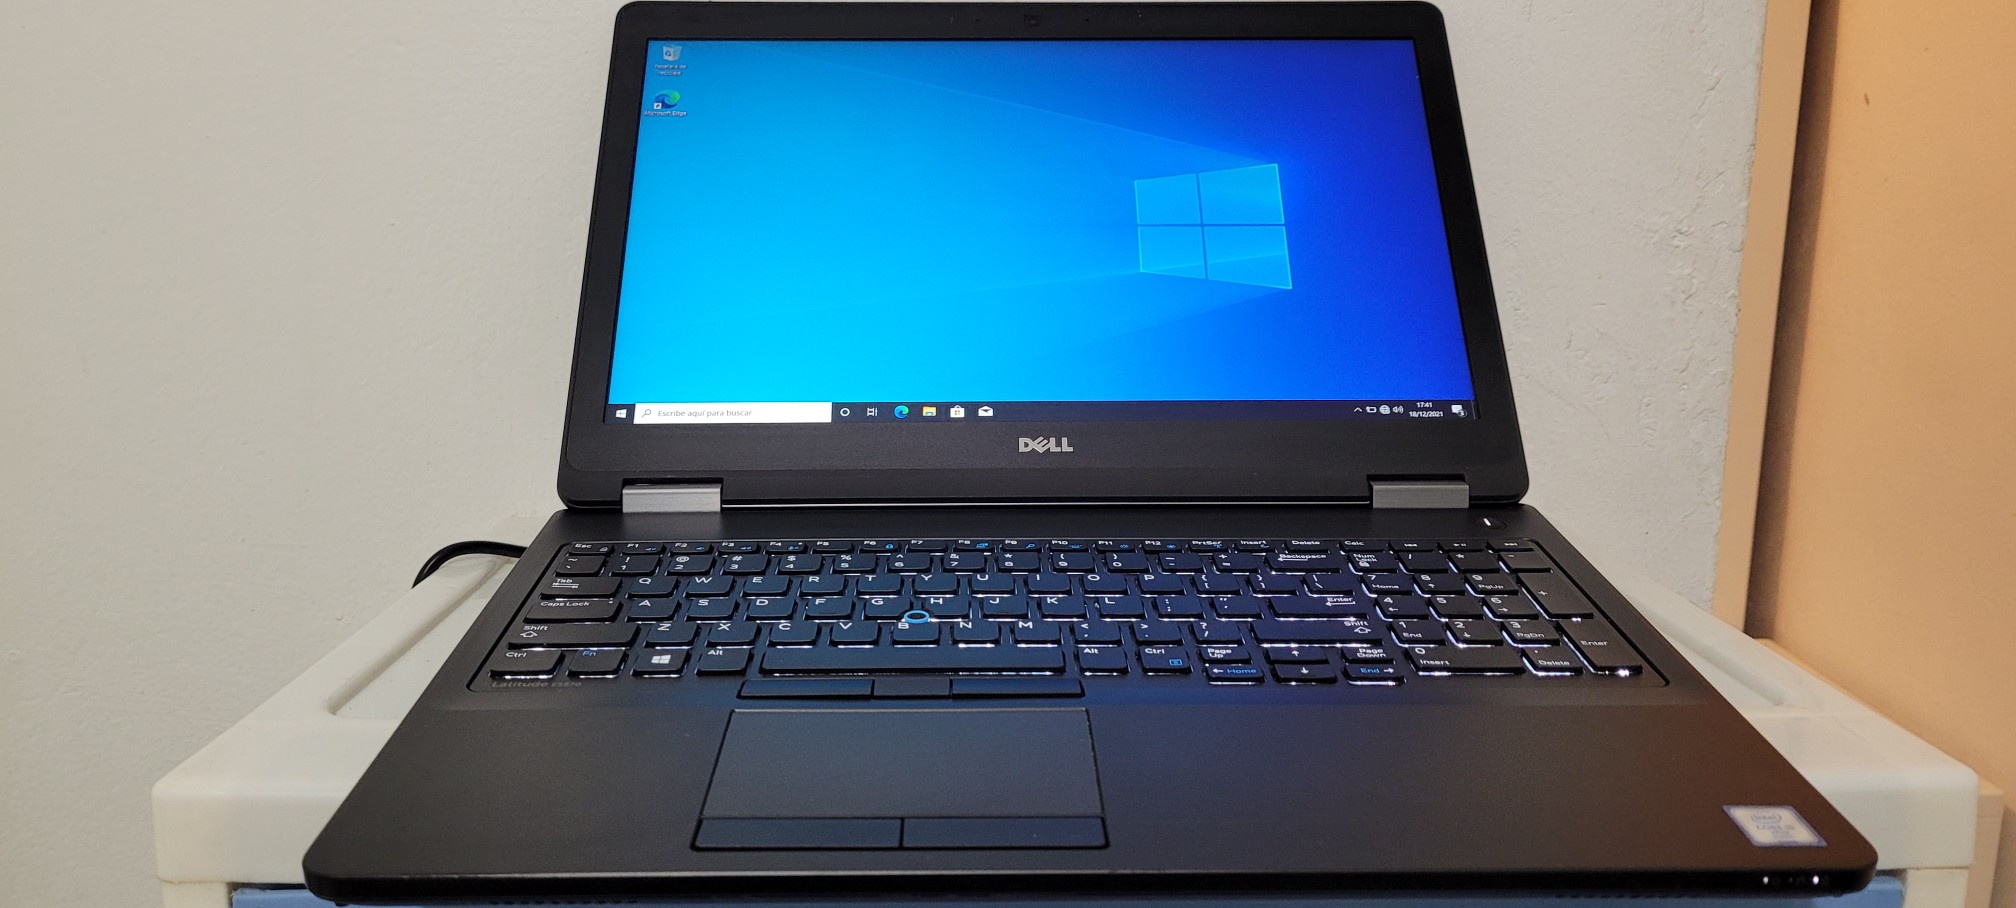 computadoras y laptops - Dell 5550 17 Pulg Core i7 Ram 8gb Disco 1tb hdmi